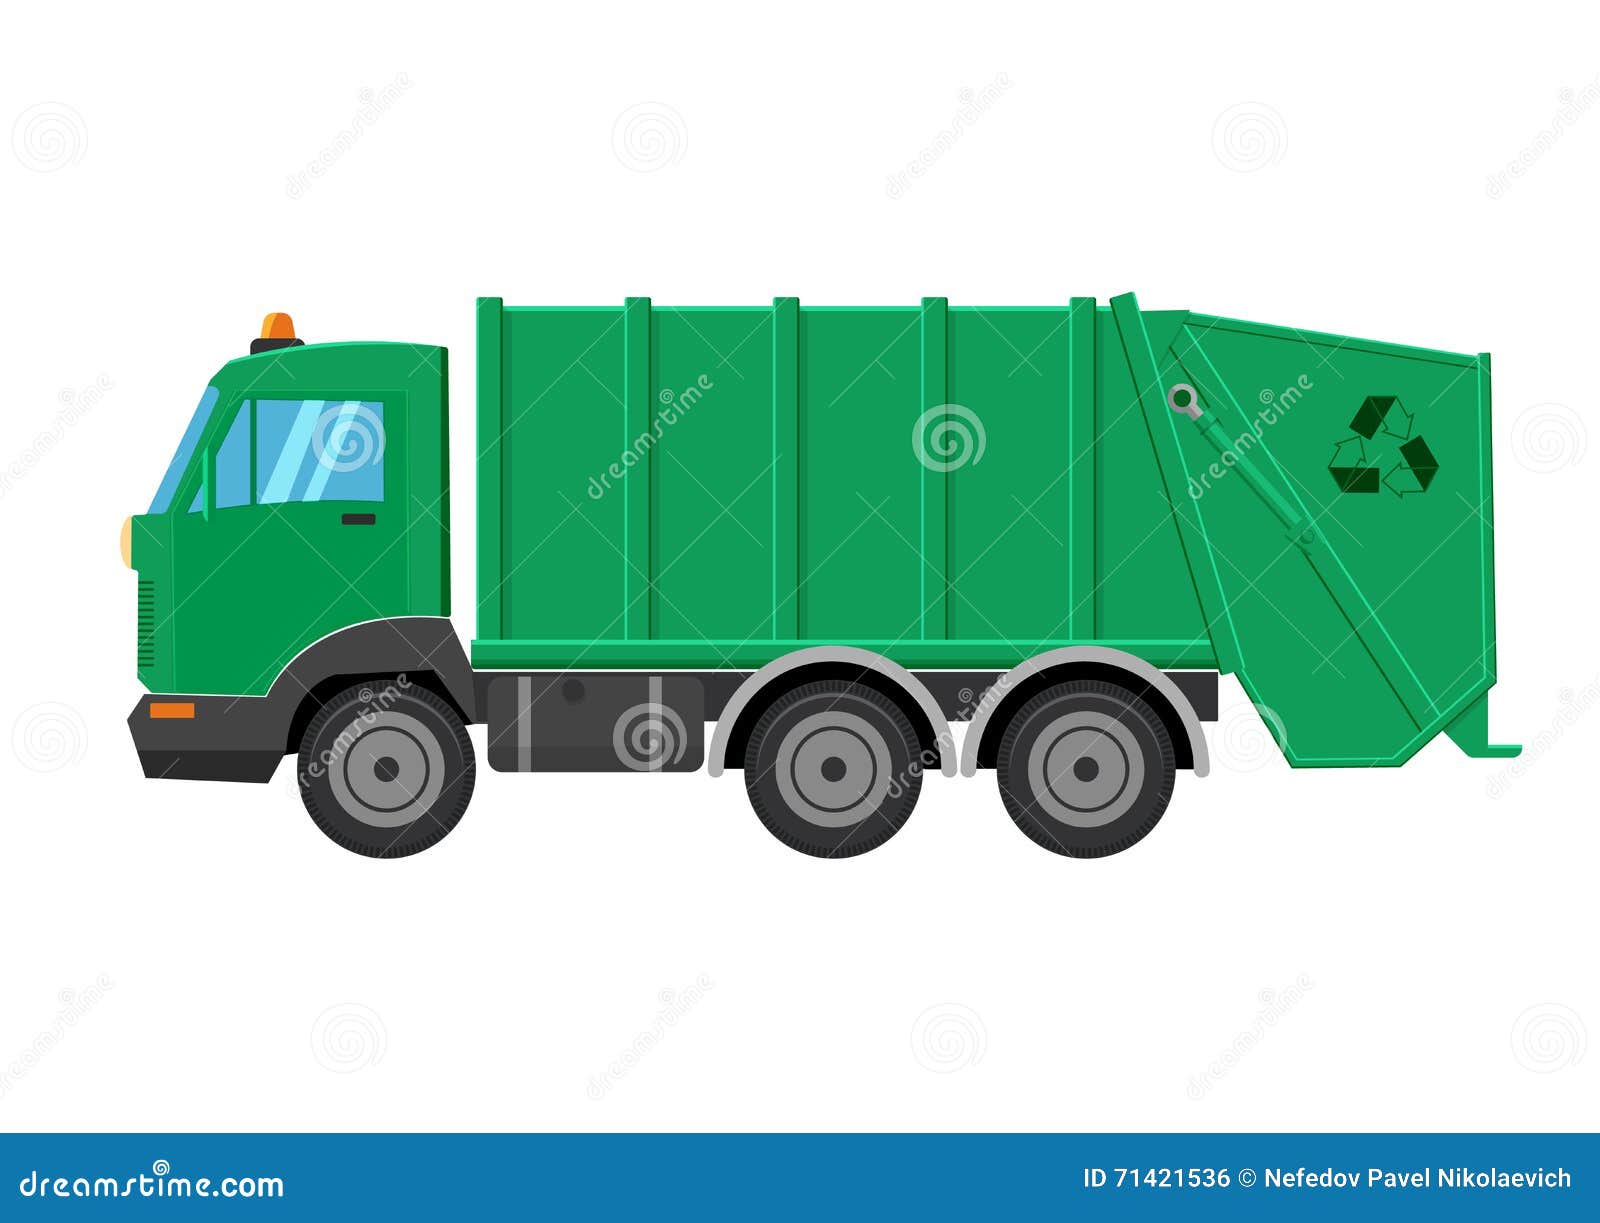 Garbage Truck Illustration Isolated on White Background Stock ...